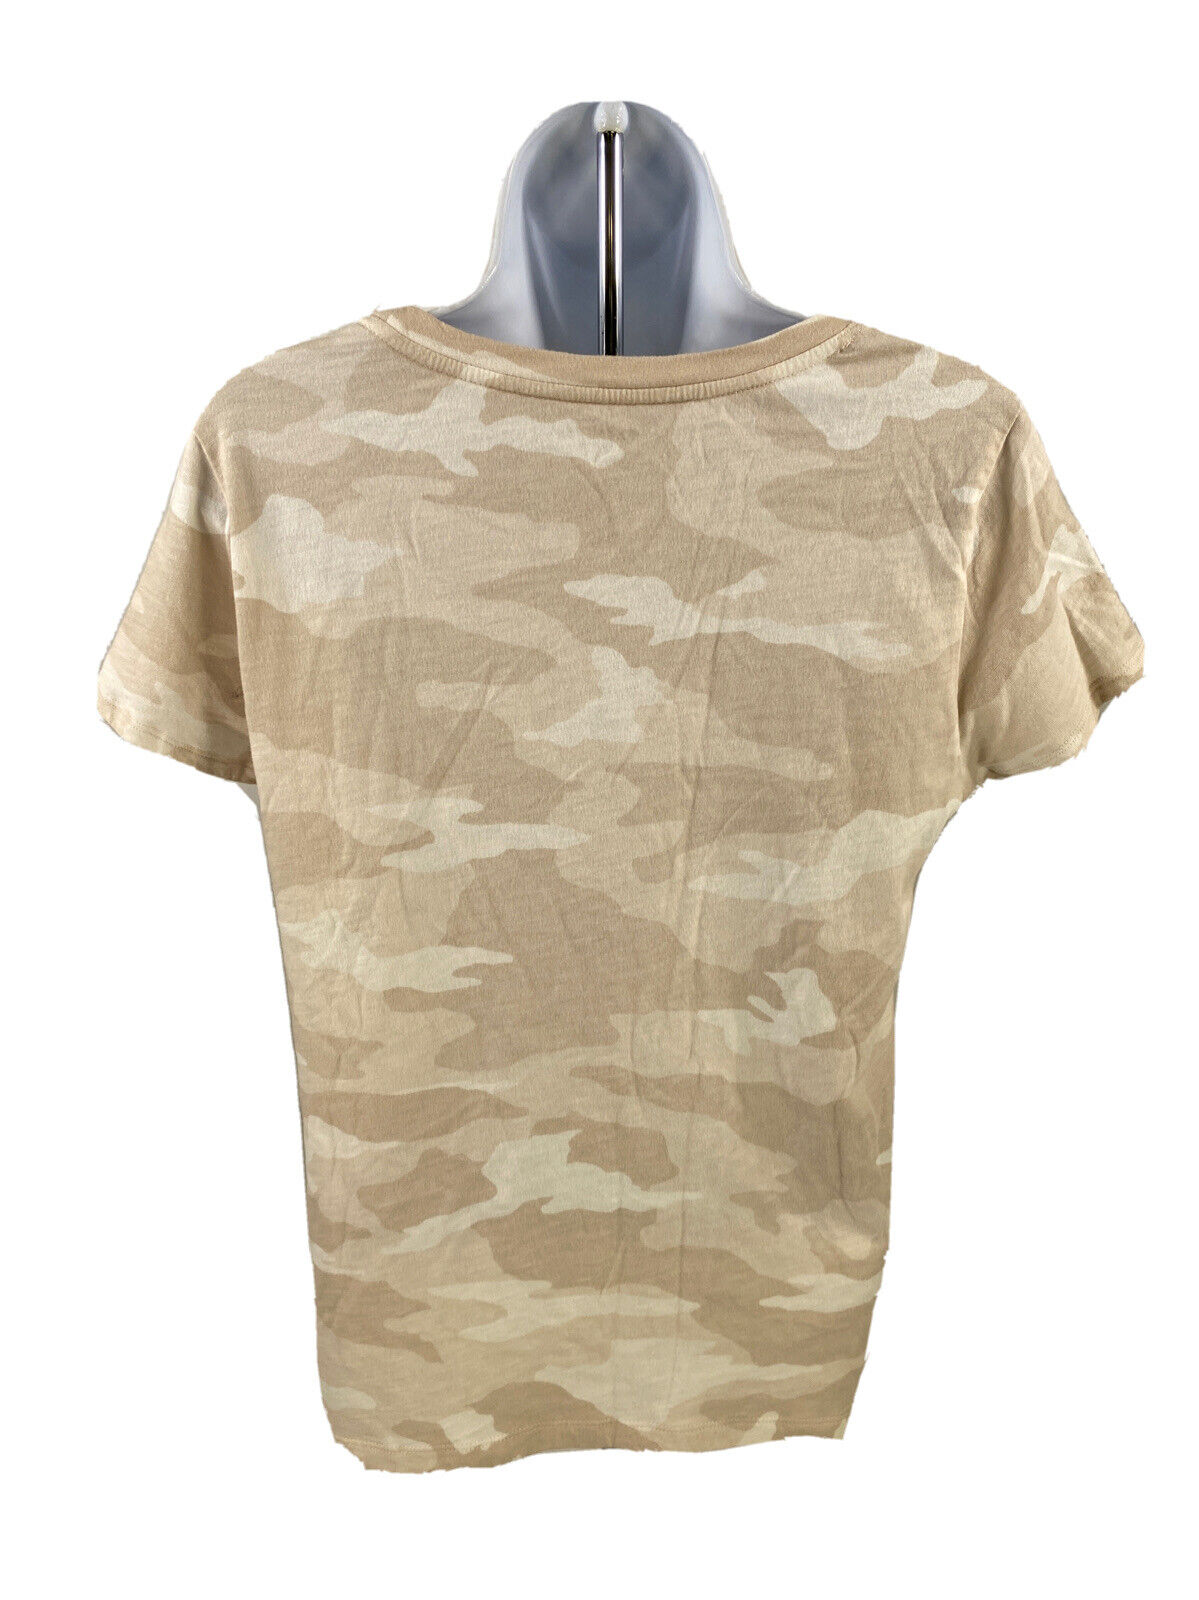 Athleta Women's Beige Camouflage Short Sleeve Daily Crewneck T-Shirt - M